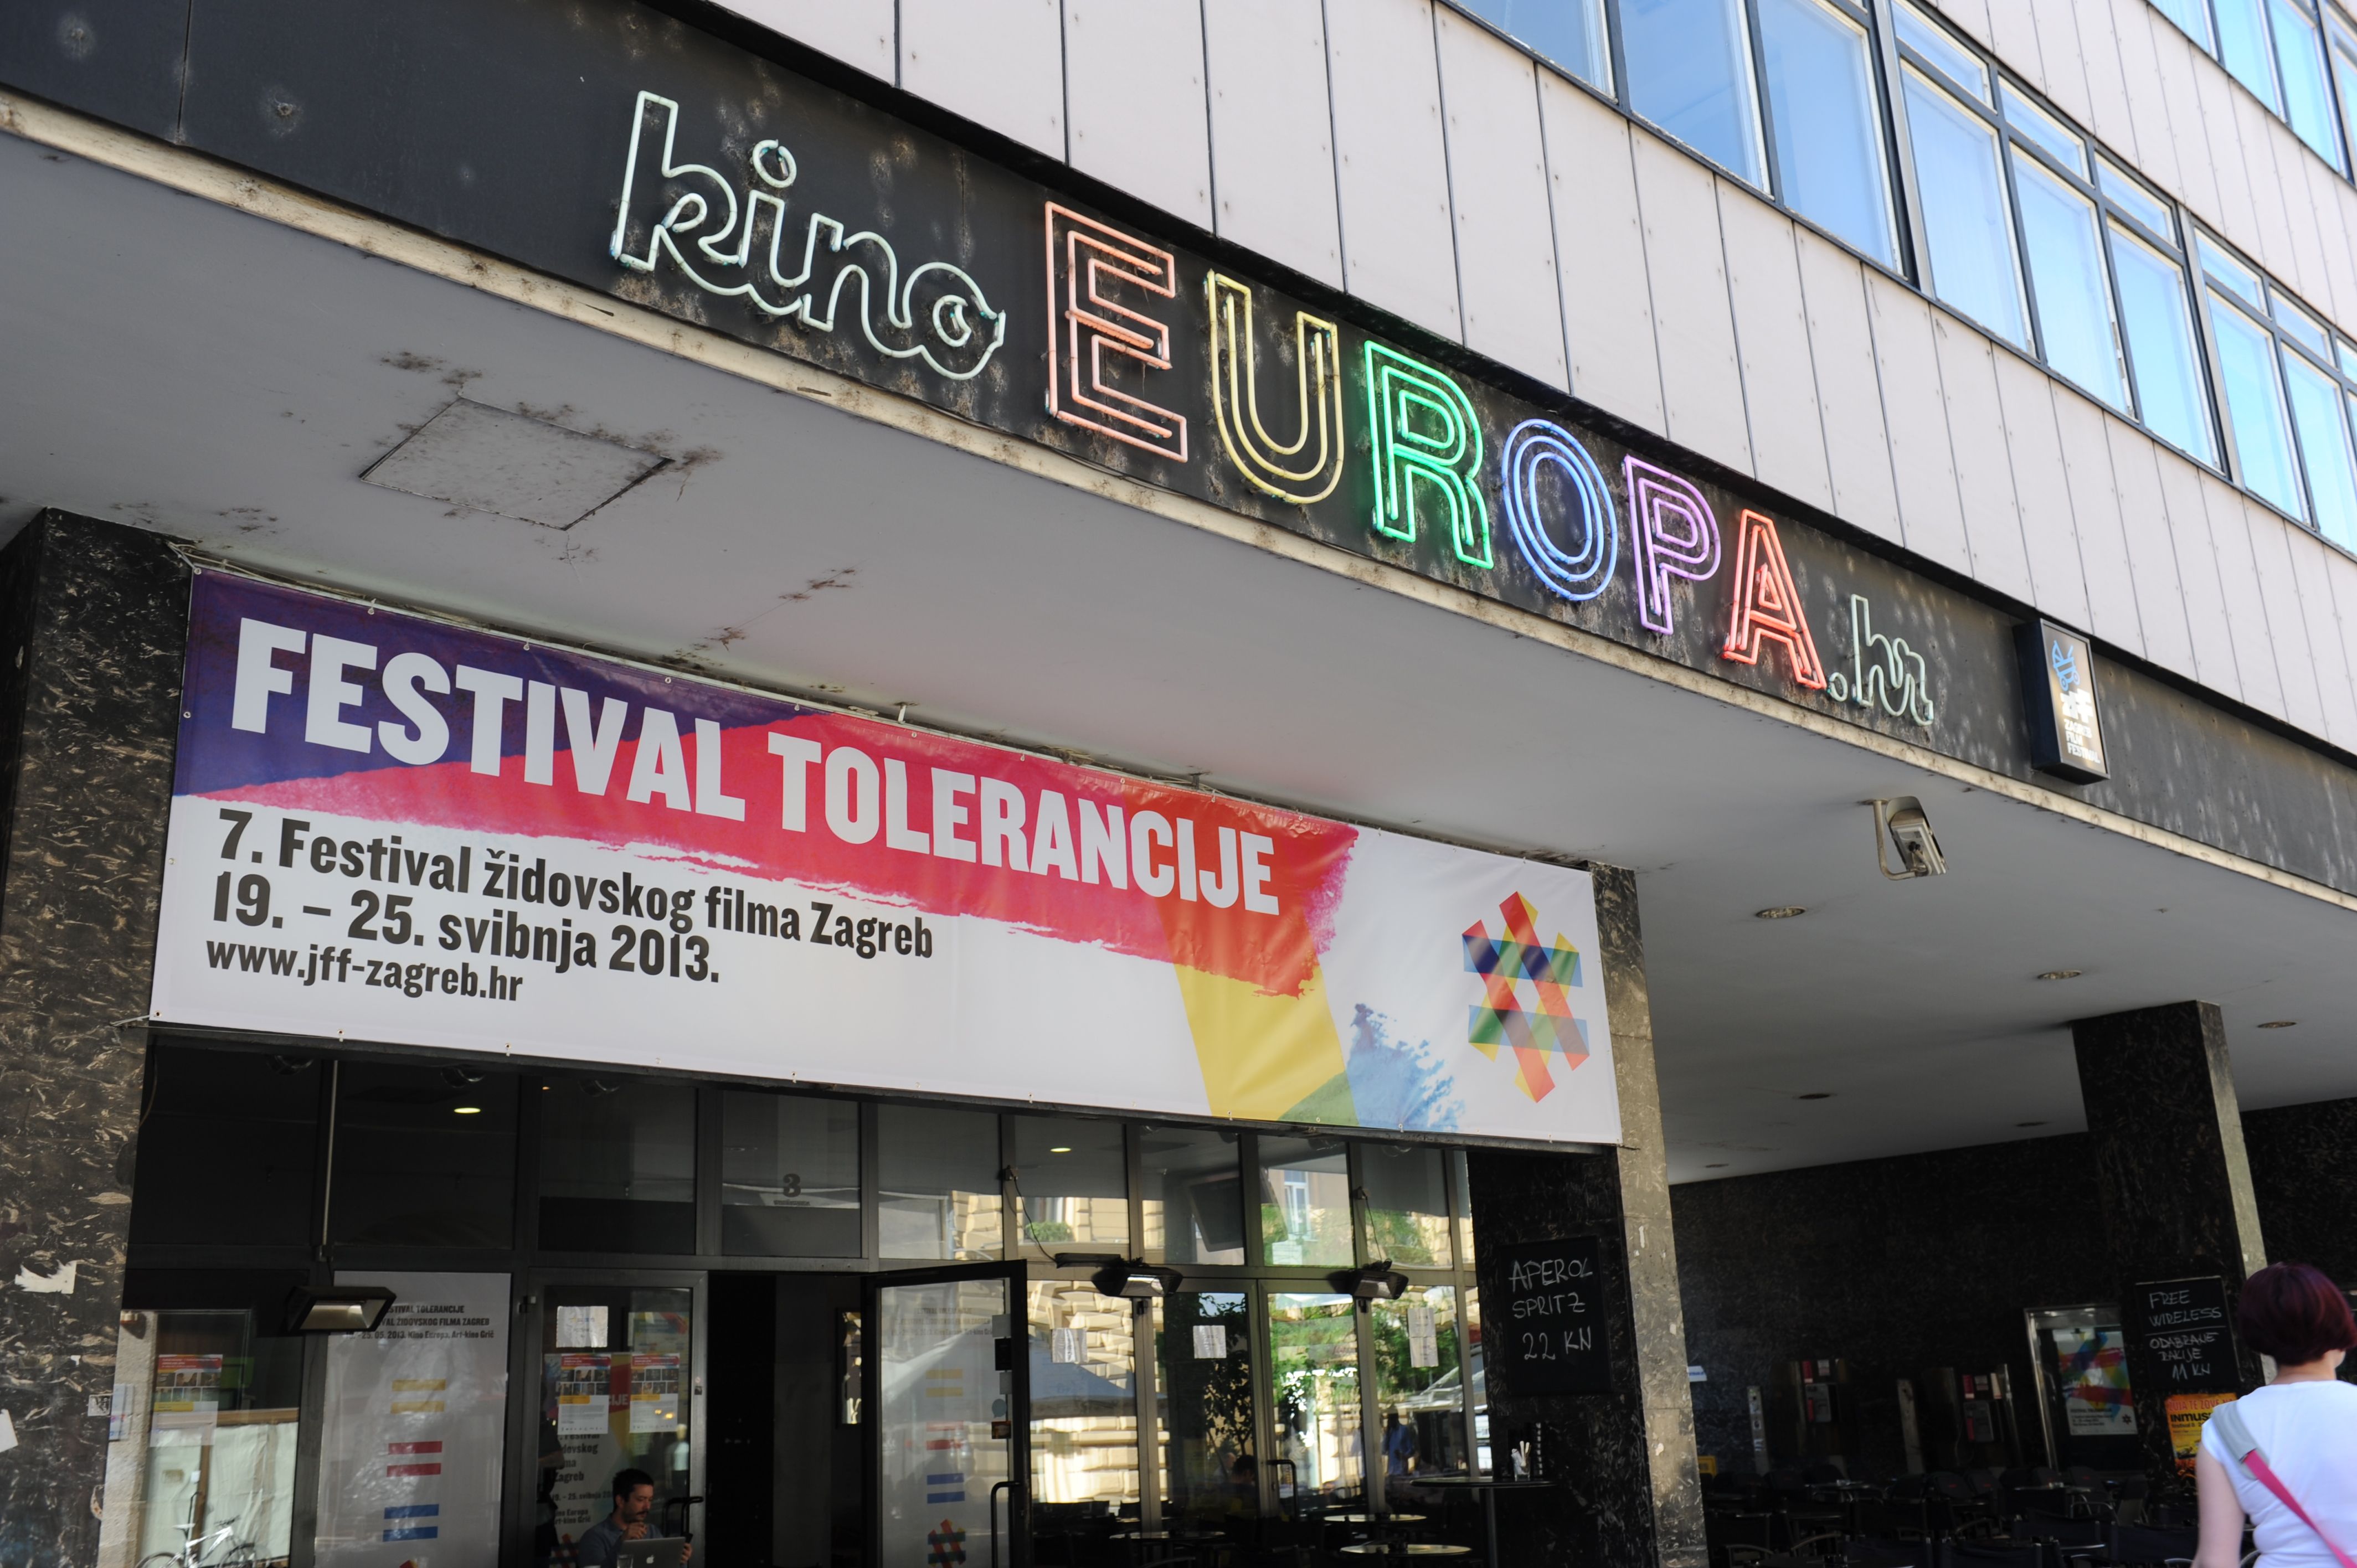 Outside the Kino Europa Zagreb 7th Festival of Tolerance